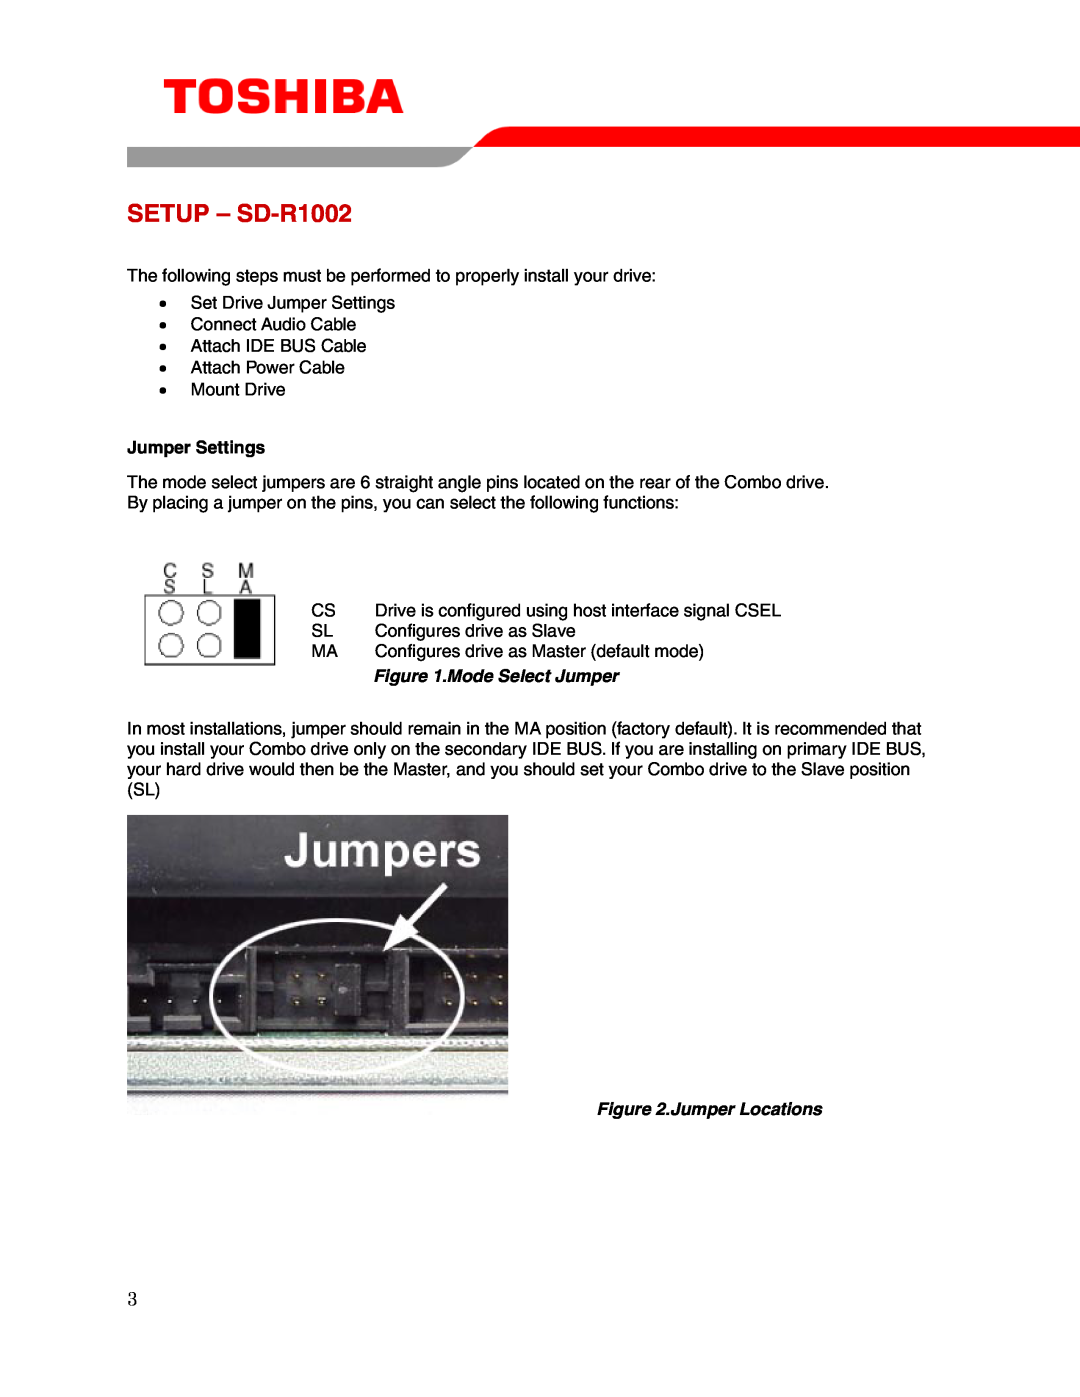 Toshiba user manual SETUP - SD-R1002, Mode Select Jumper, Jumper Locations, Jumper Settings 